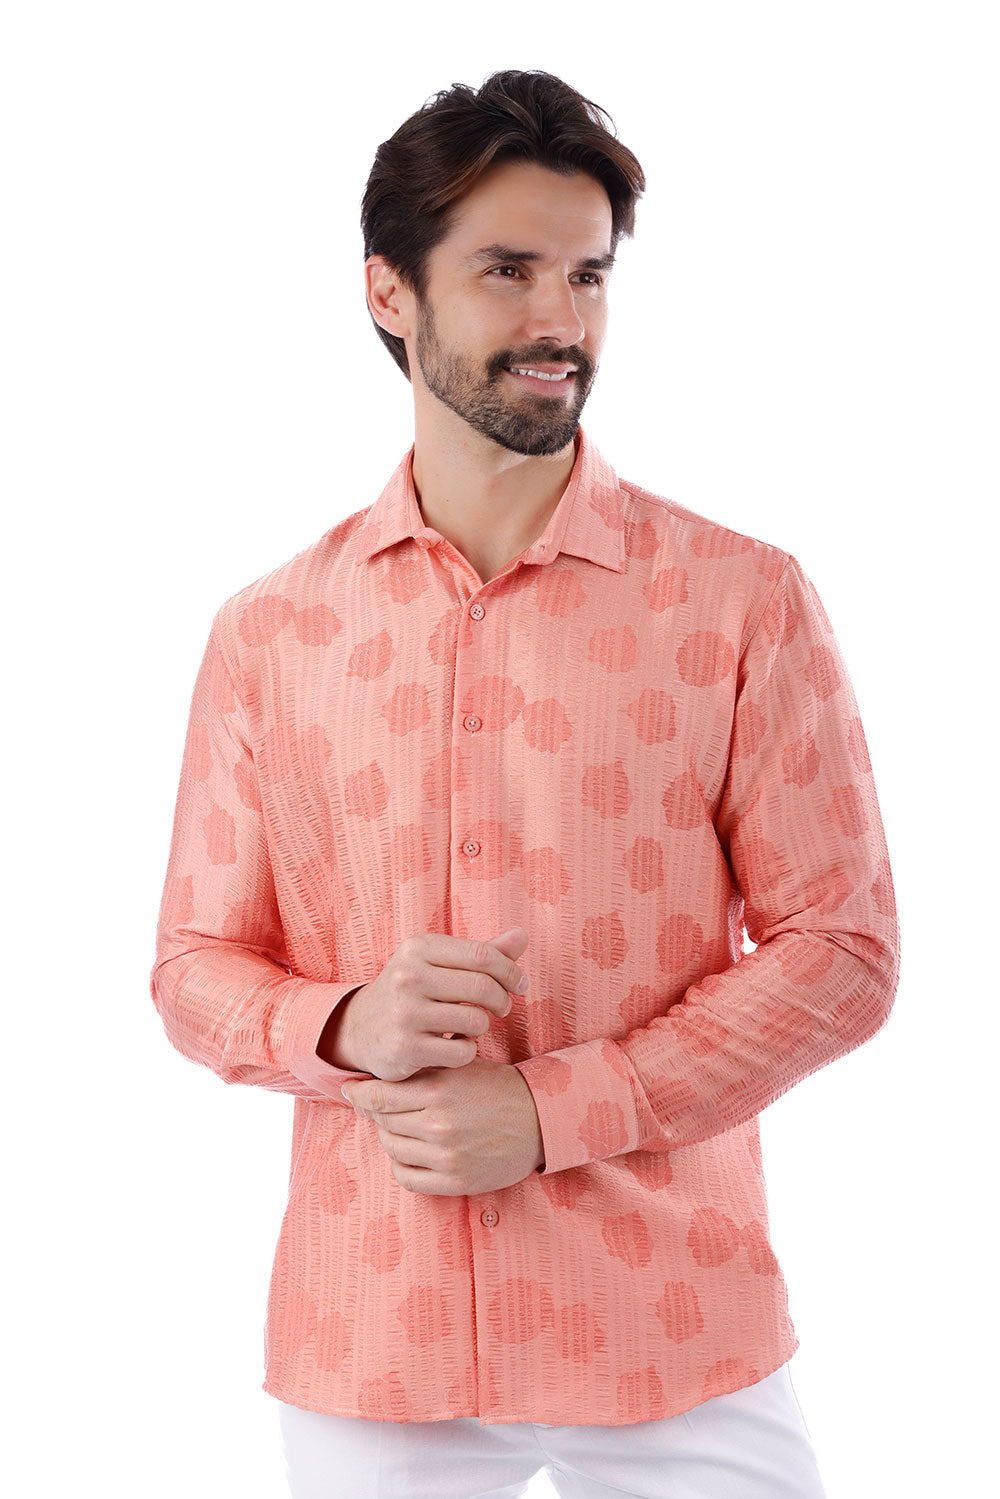 BARABAS Men's Floral Rose Button Down Long Sleeve Shirt 4B31 Coral